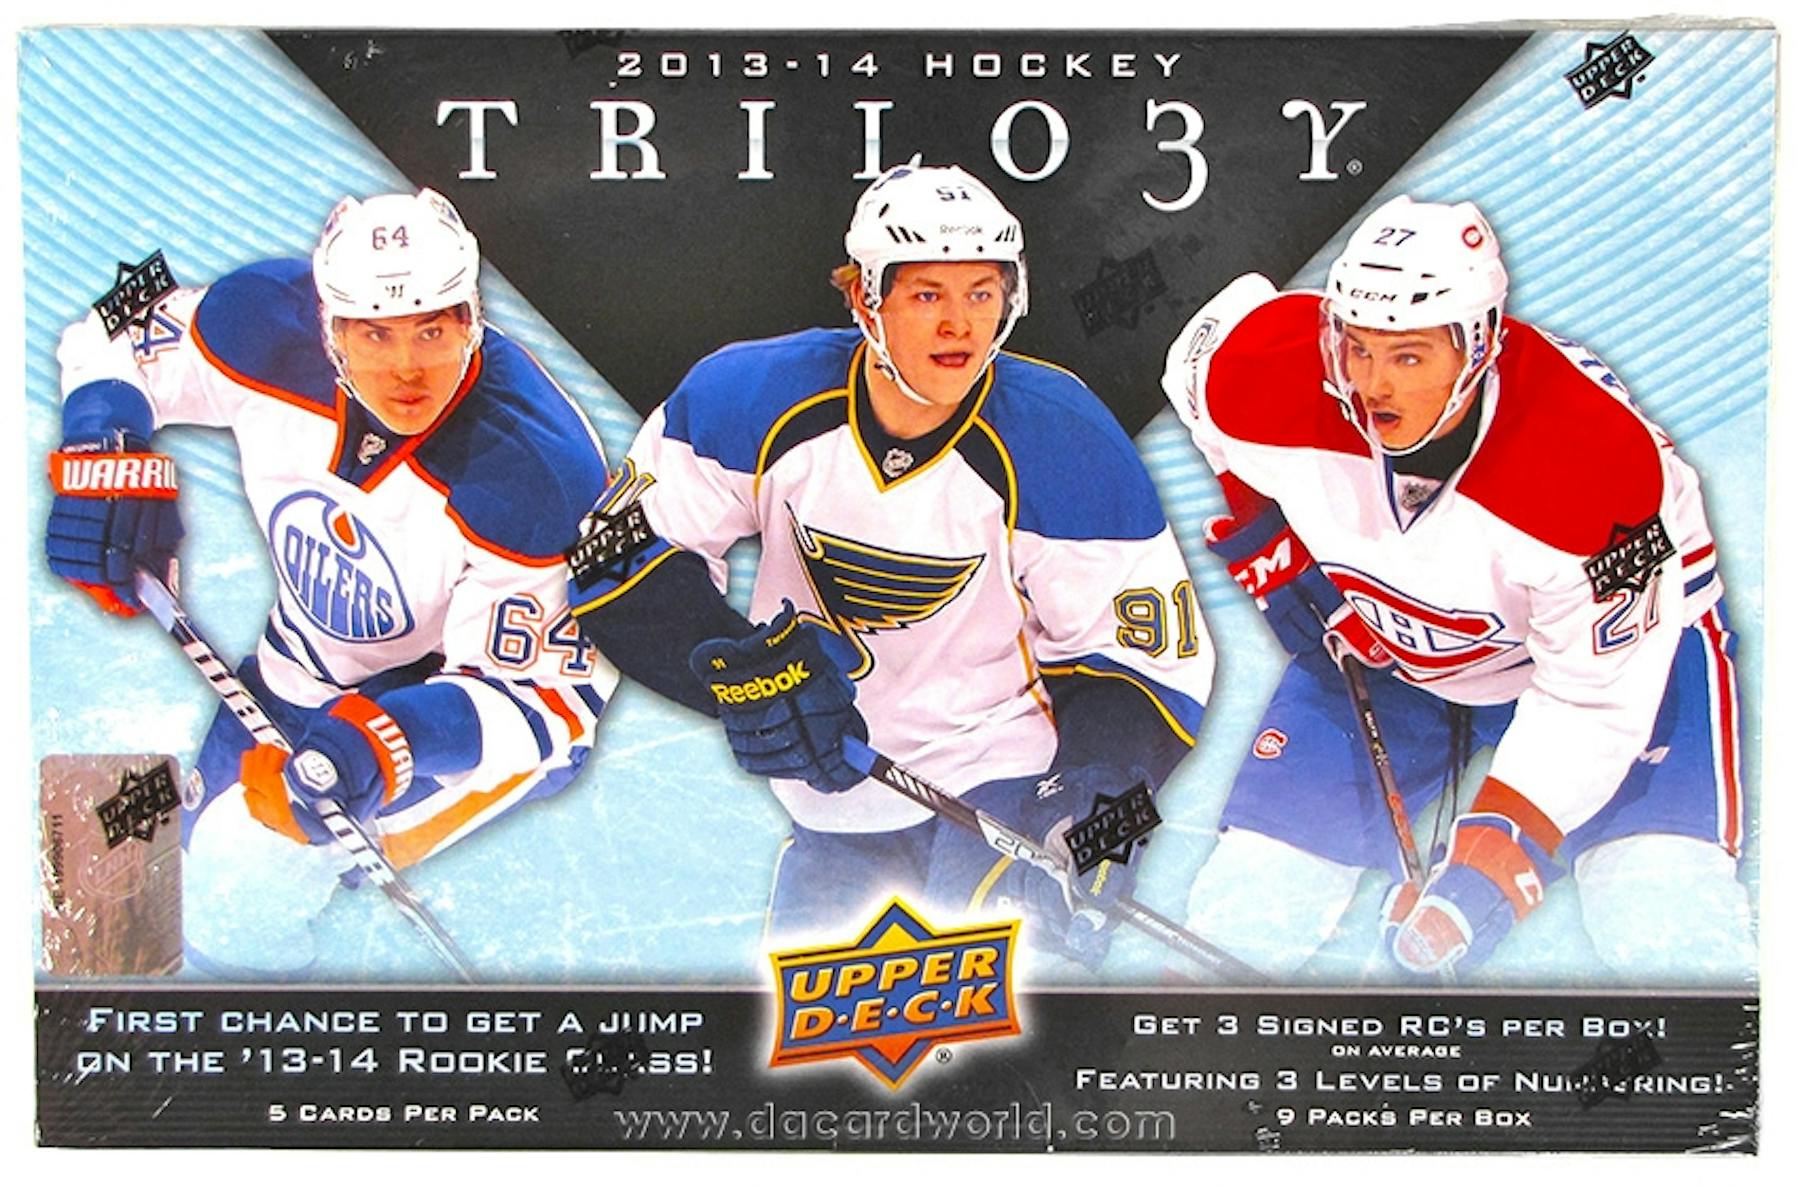 2023/24 Upper Deck Trilogy NHL Hockey Hobby Box / Case PRE ORDER